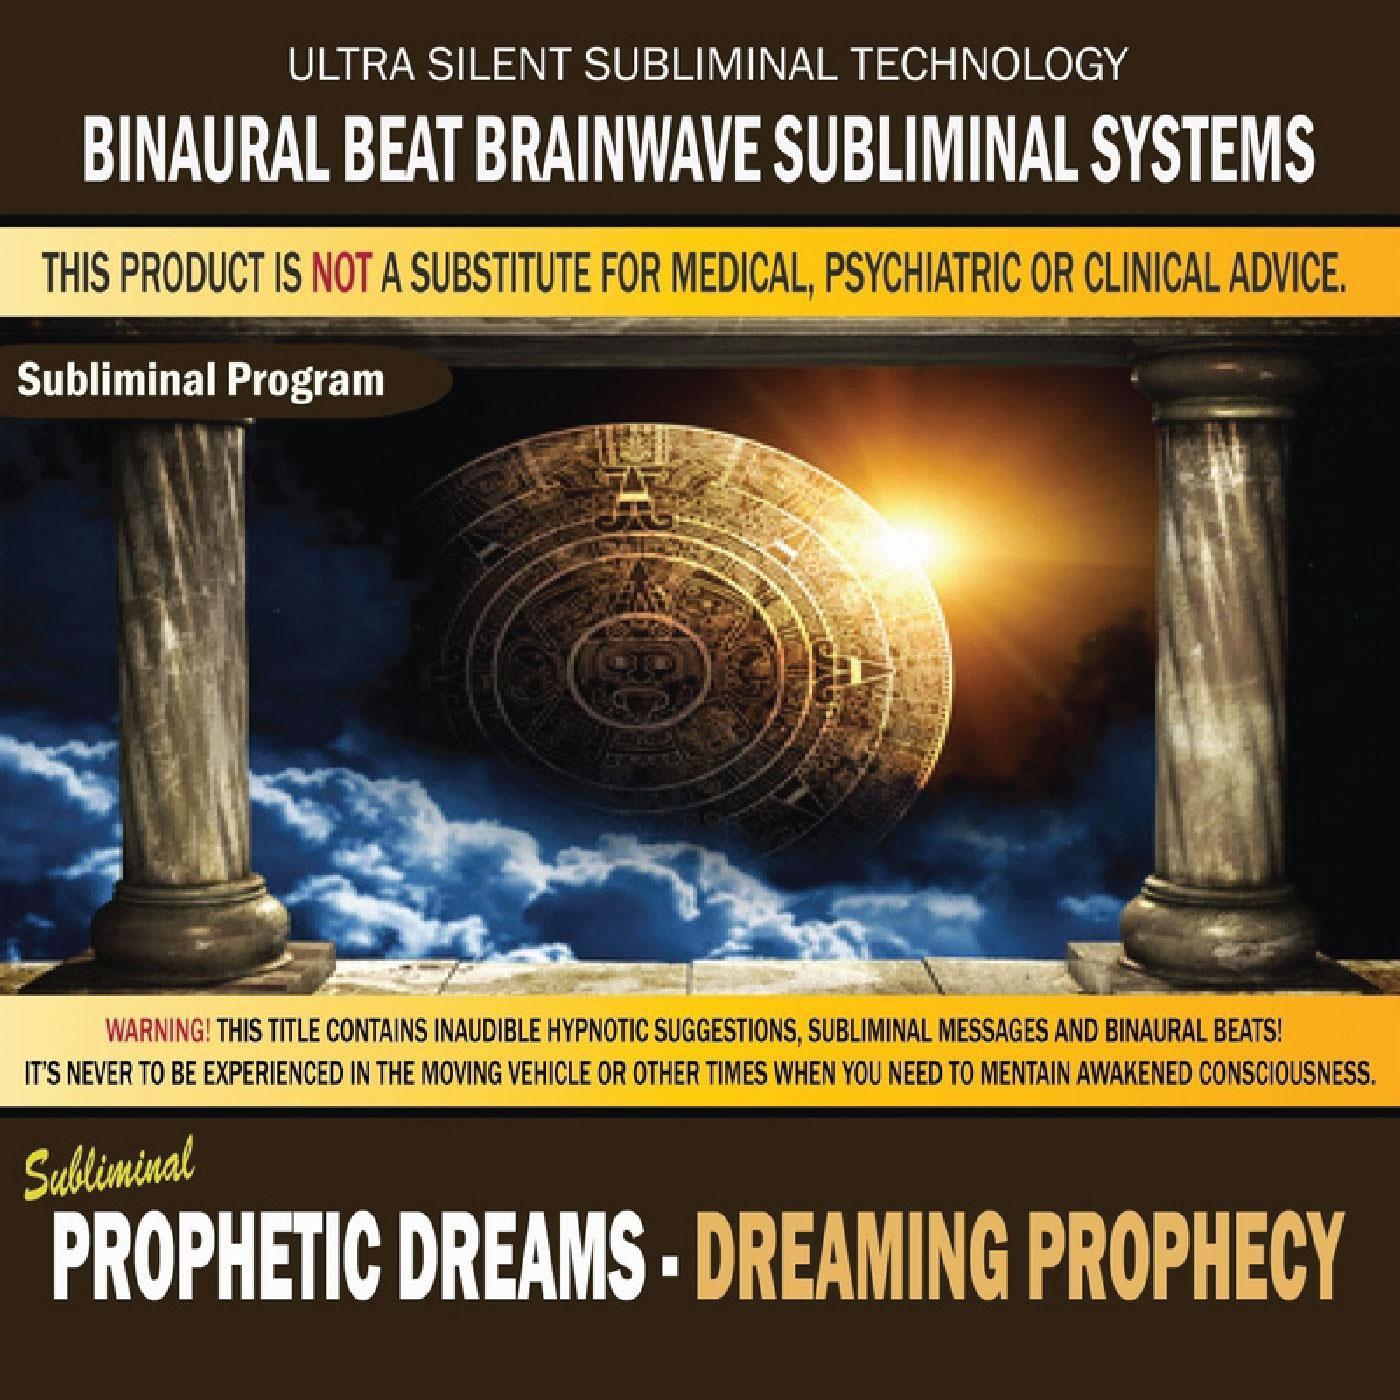 Prophetic Dreams: Dreaming Prophecy